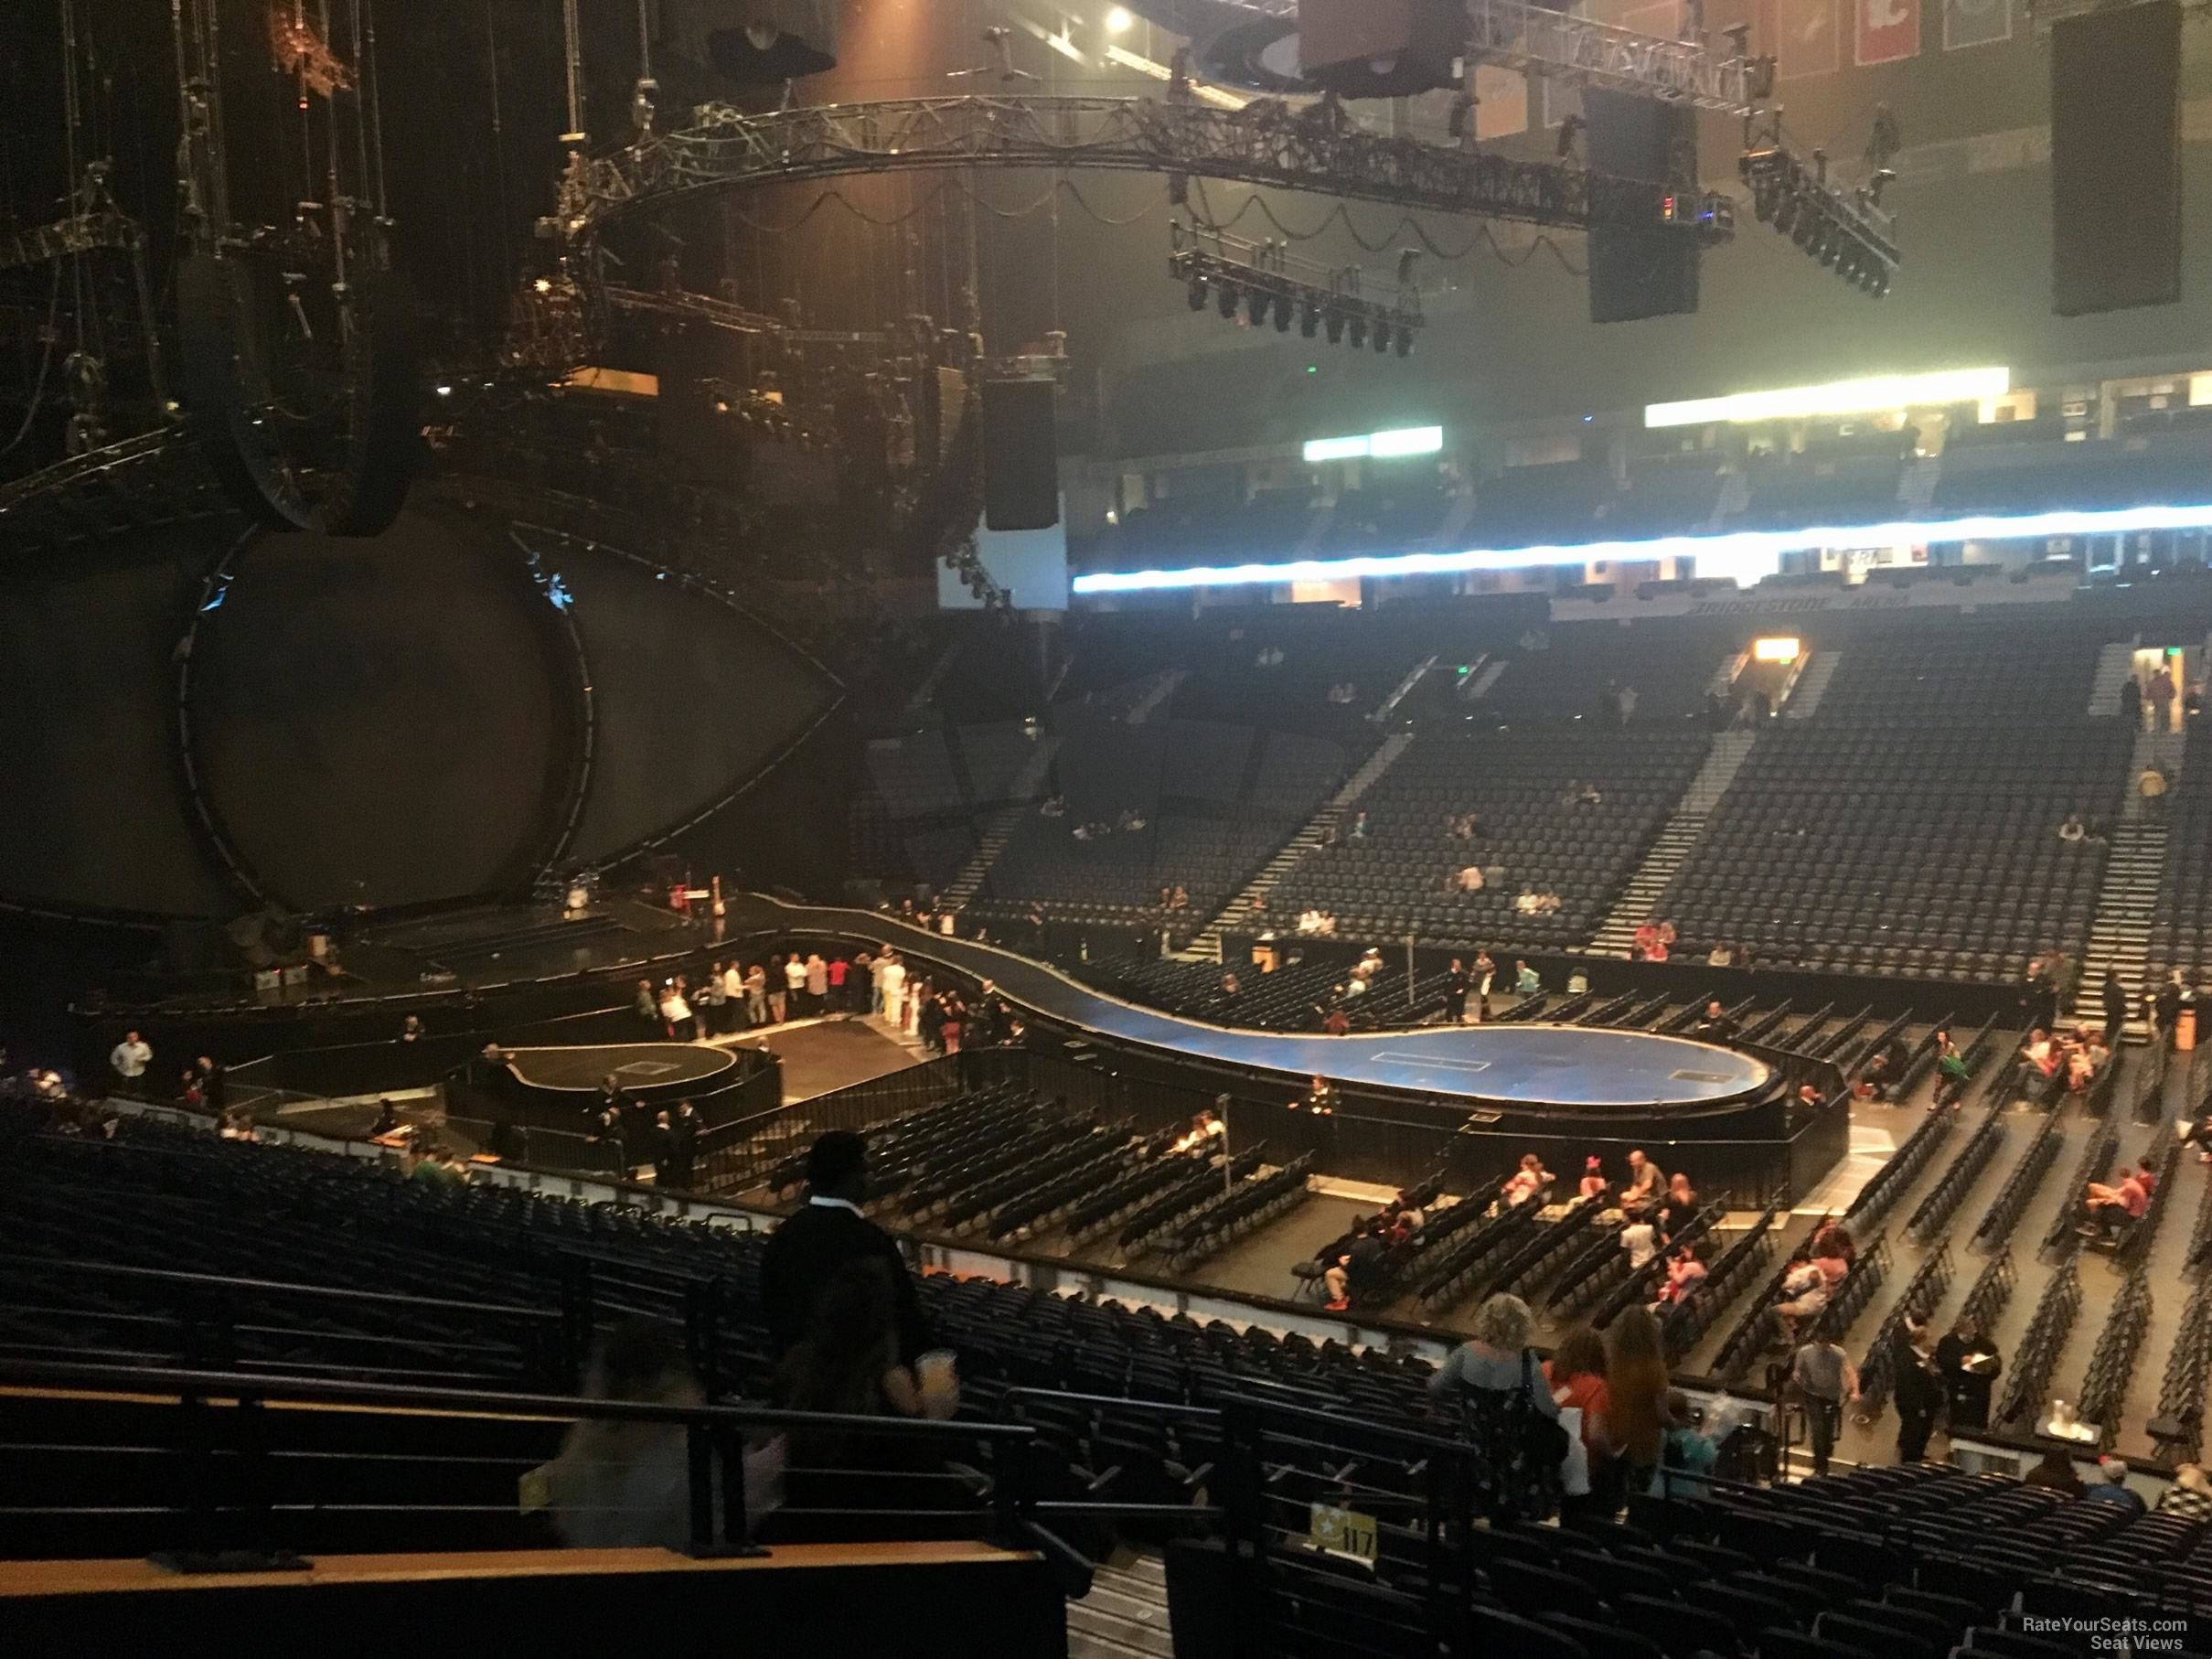 Bridgestone Arena Section 117 Concert Seating - RateYourSeats.com